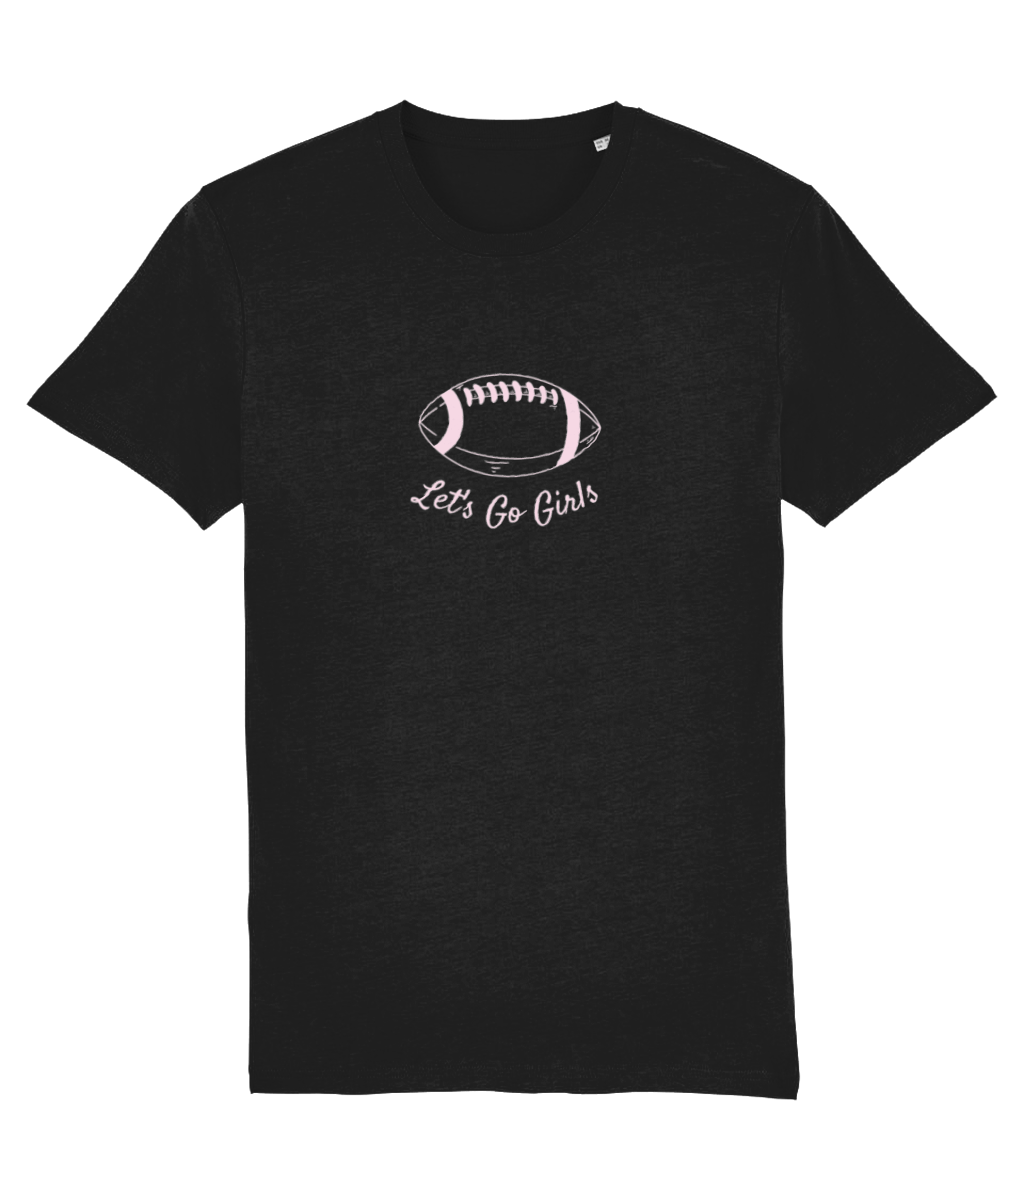 Let's Go Girls American Football T-Shirt